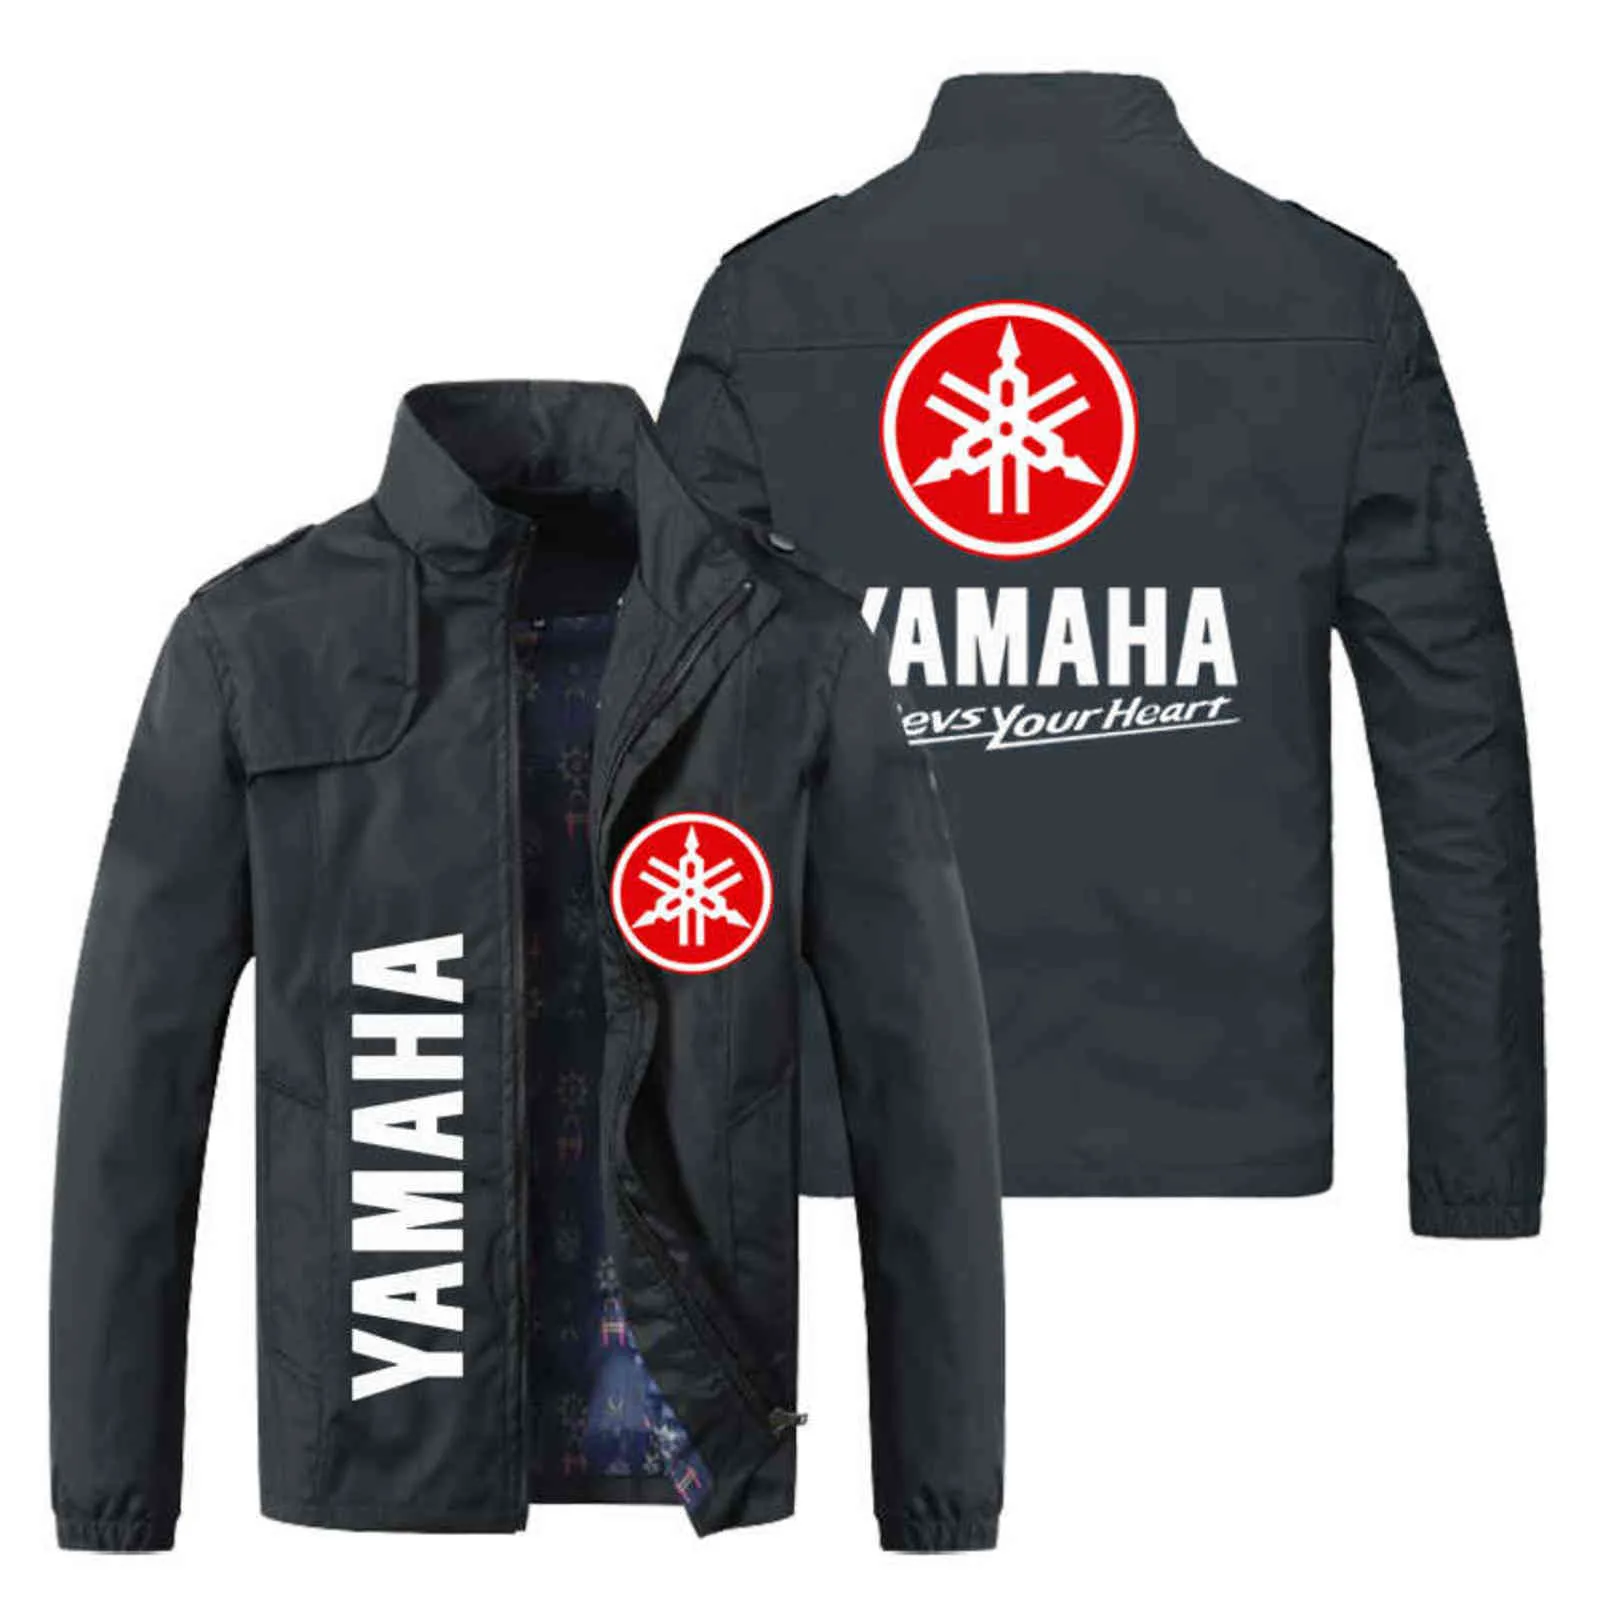 Yamaha Men Jacket Yamaha Print Trend Fashion Jacket Casual Harajuku Windbreaker Outdoor Motorcycle Bike Jacket Men Coats X1106